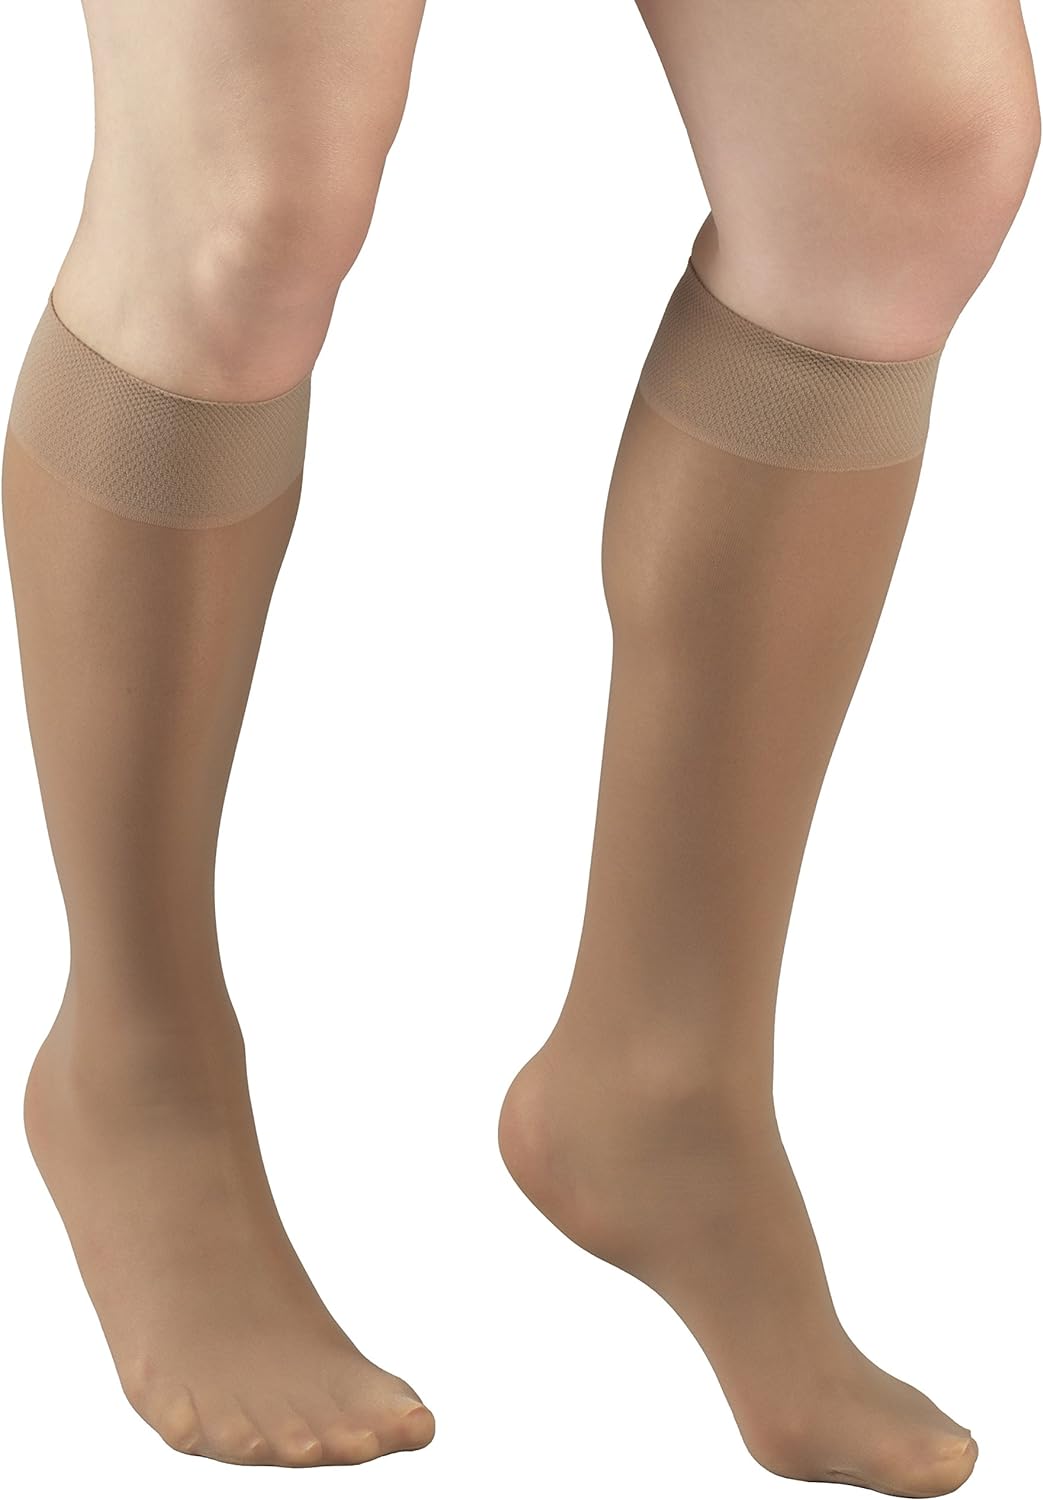 Truform 1763, Compression Stockings, Sheer, Knee High, 8-15 mmHg